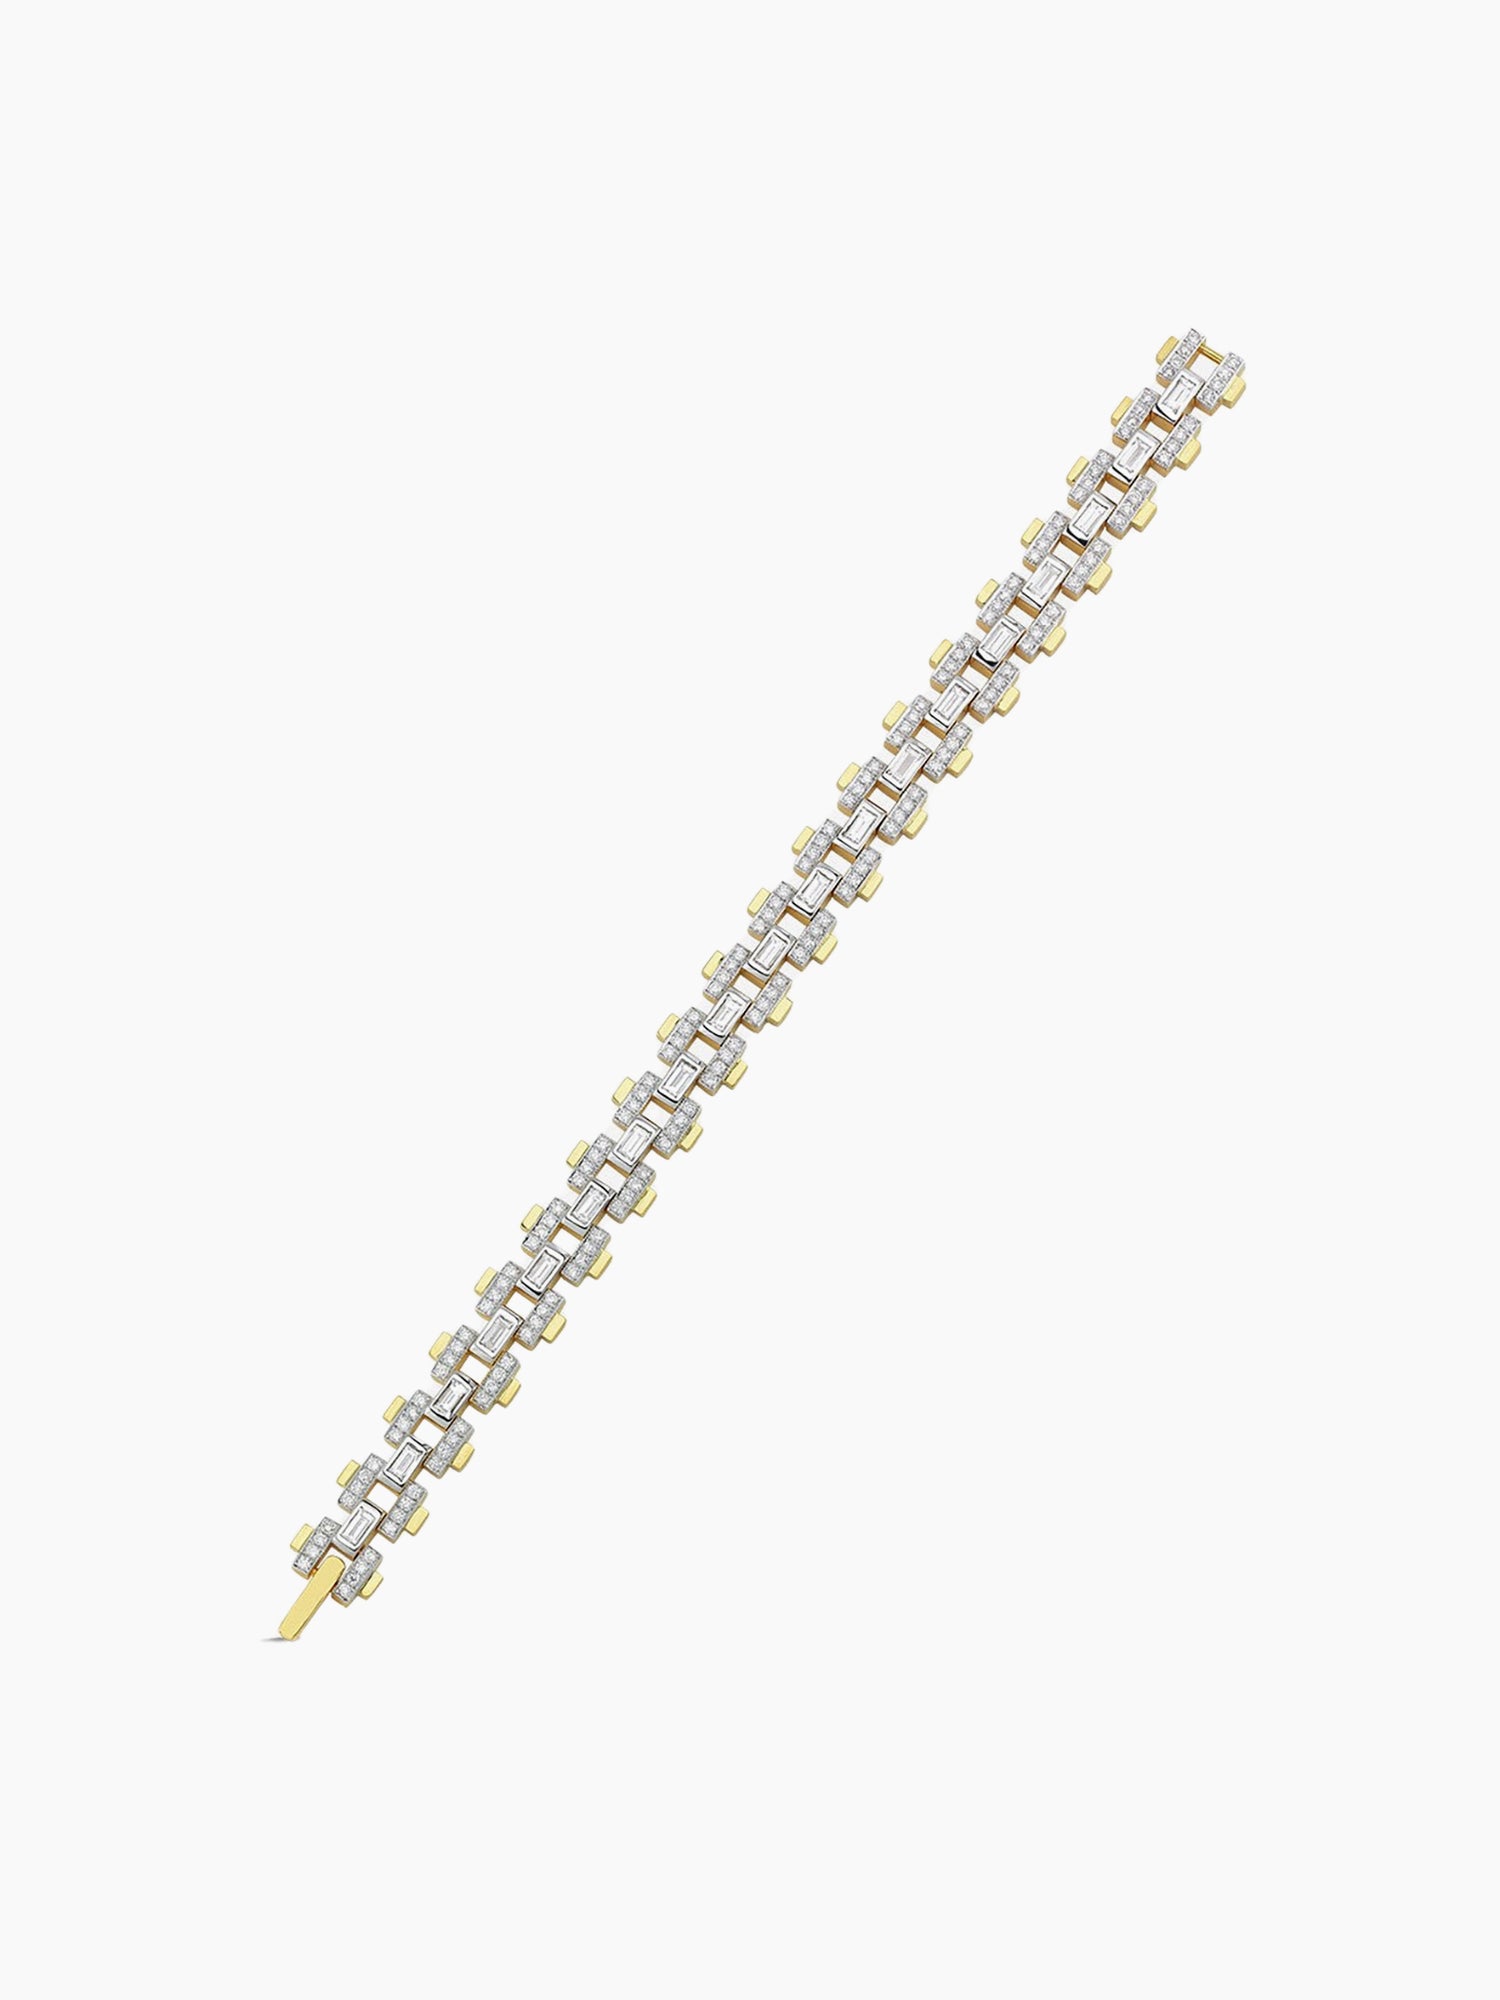 MELIS GORAL Luna Diamond Link Bracelet